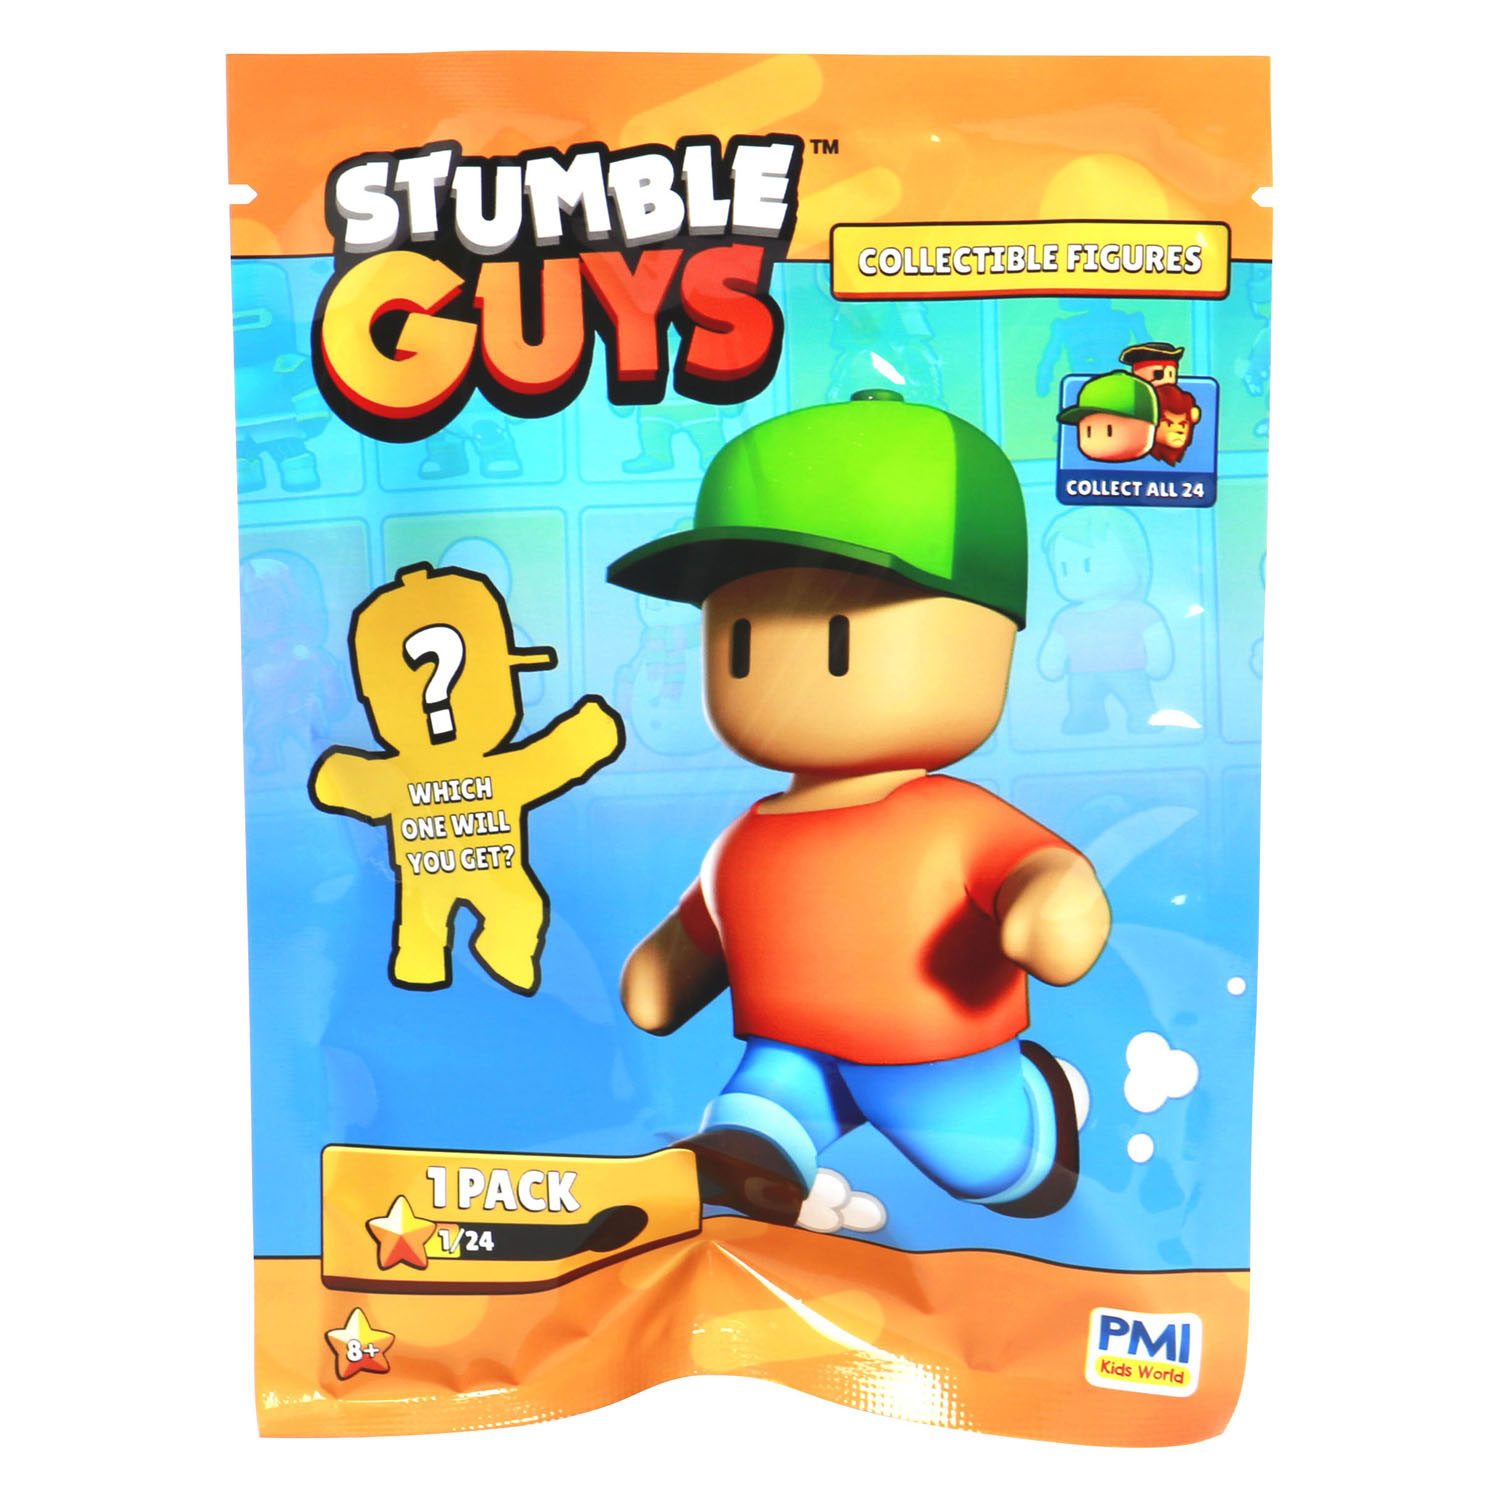 Stumble Guys Actionfiguren-Überraschungstasche